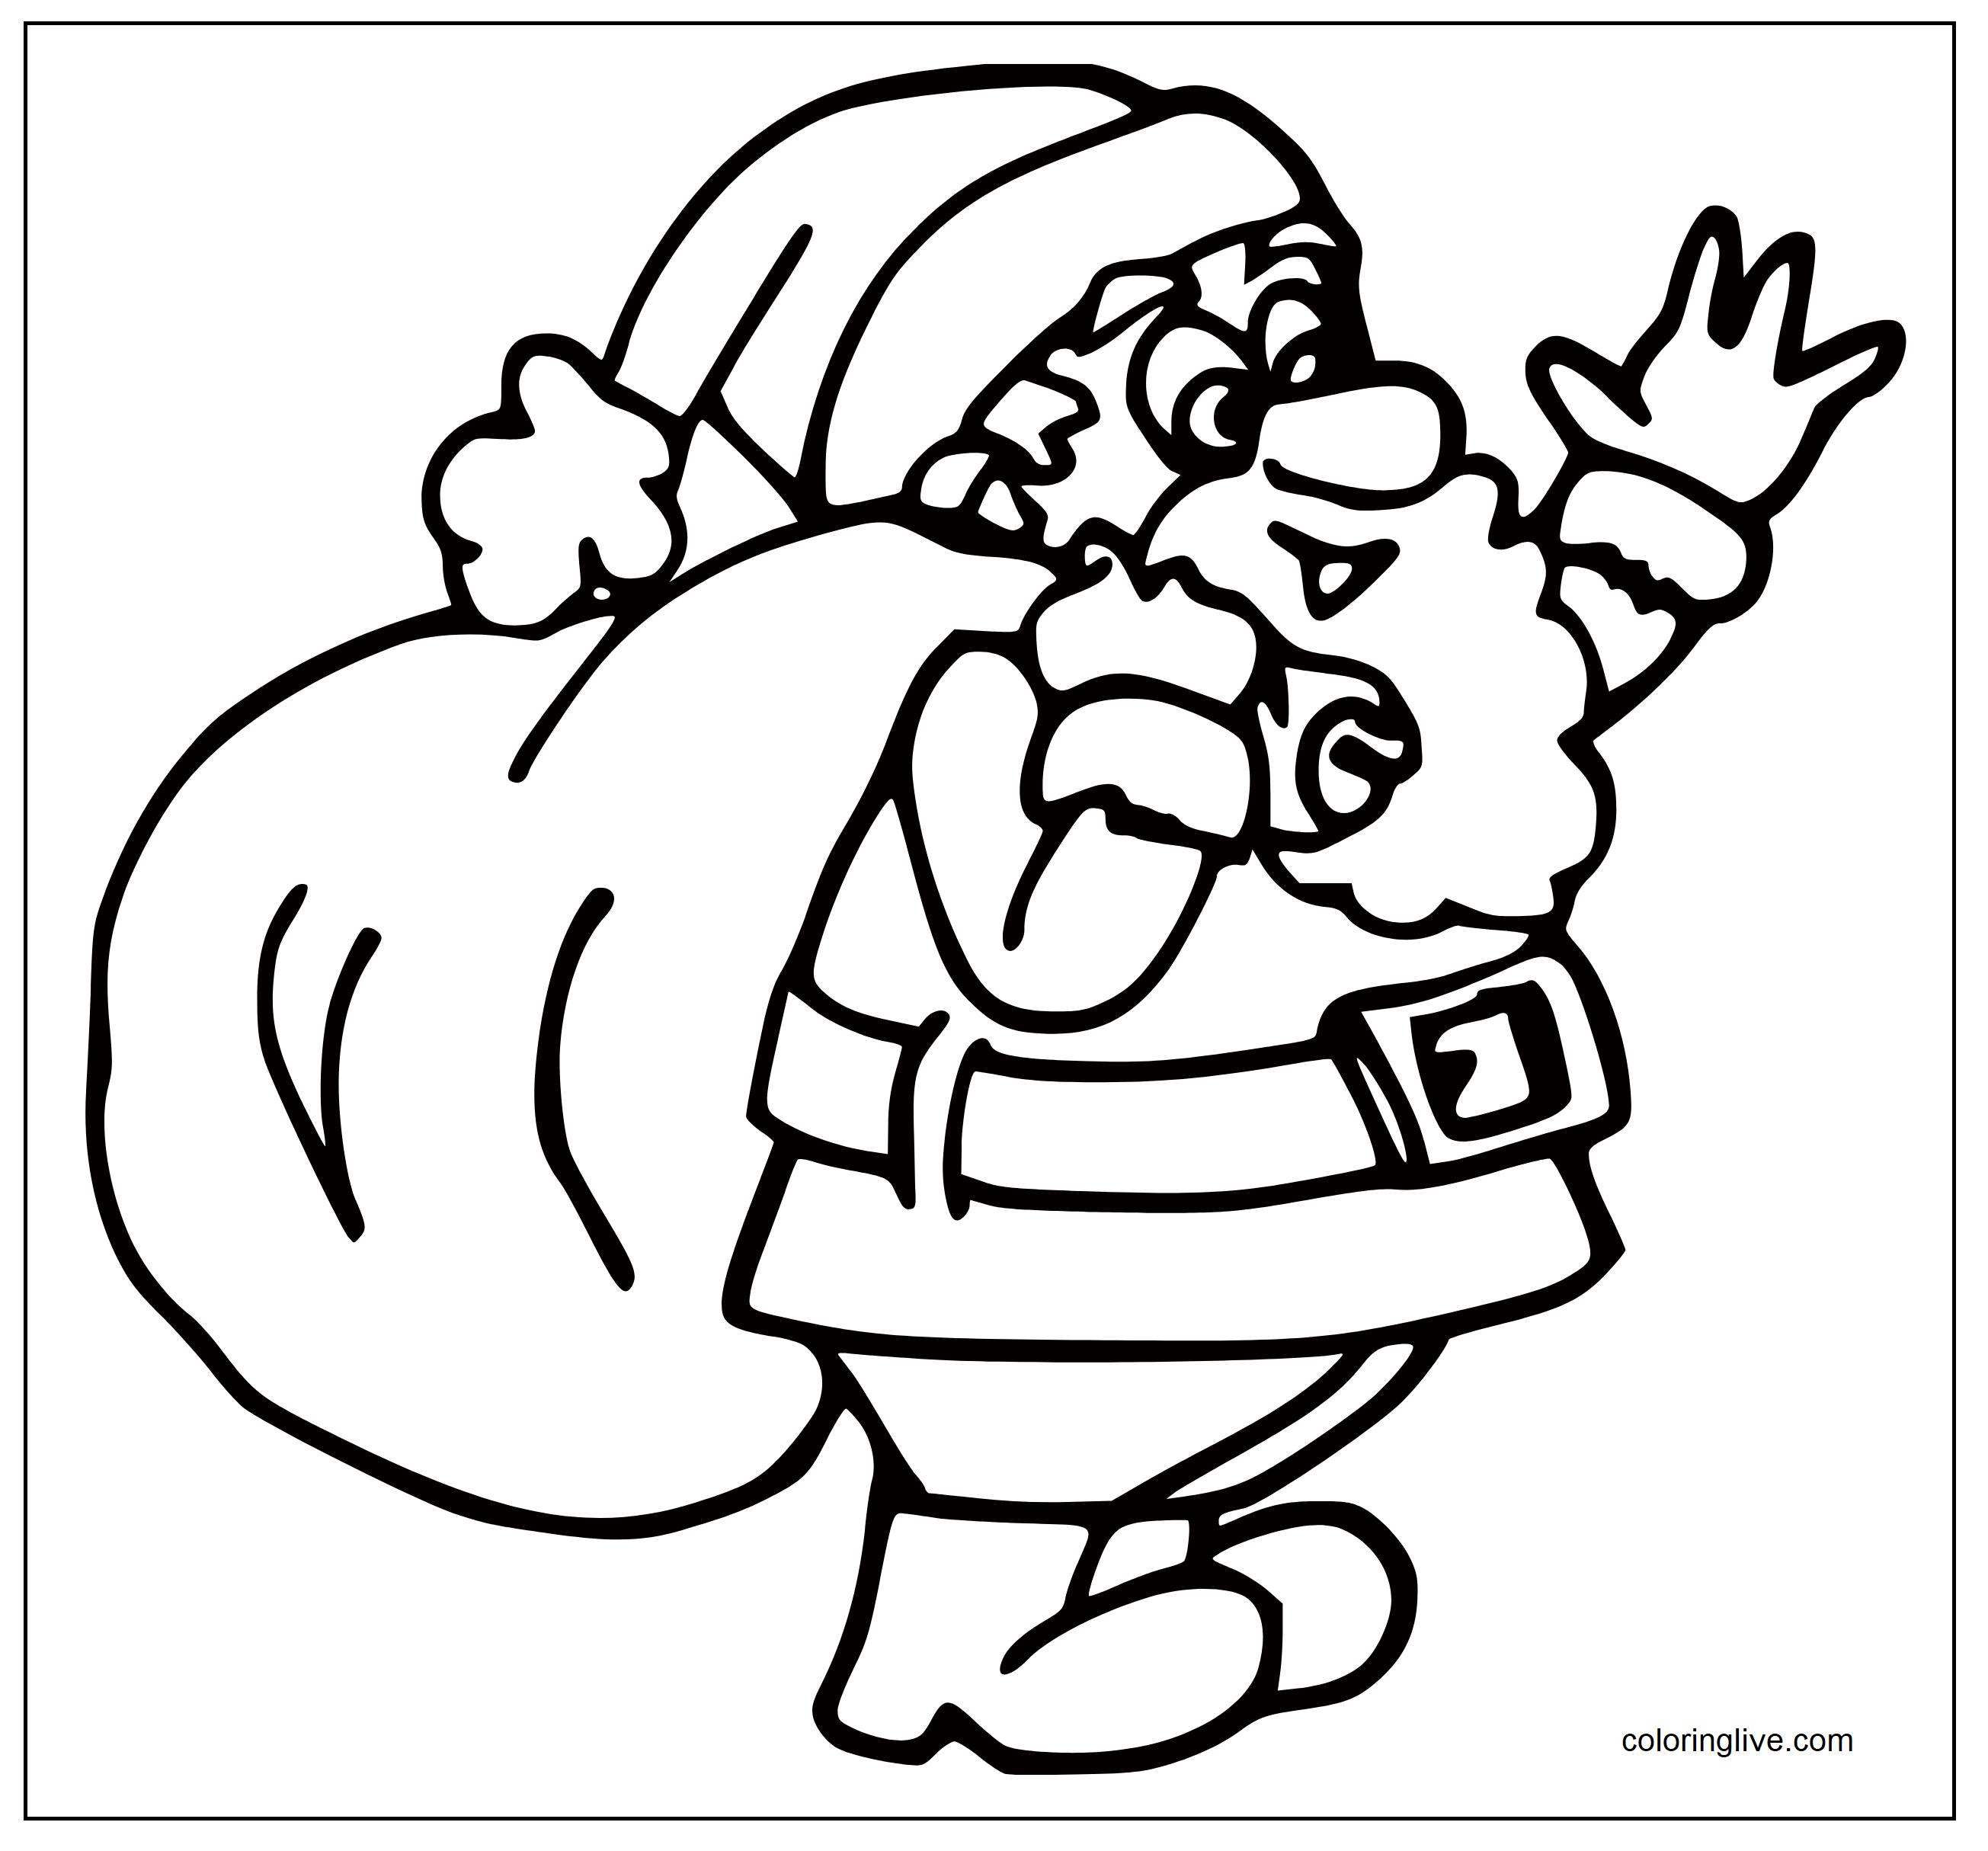 Printable Santa carrying gift bag Coloring Page for kids.